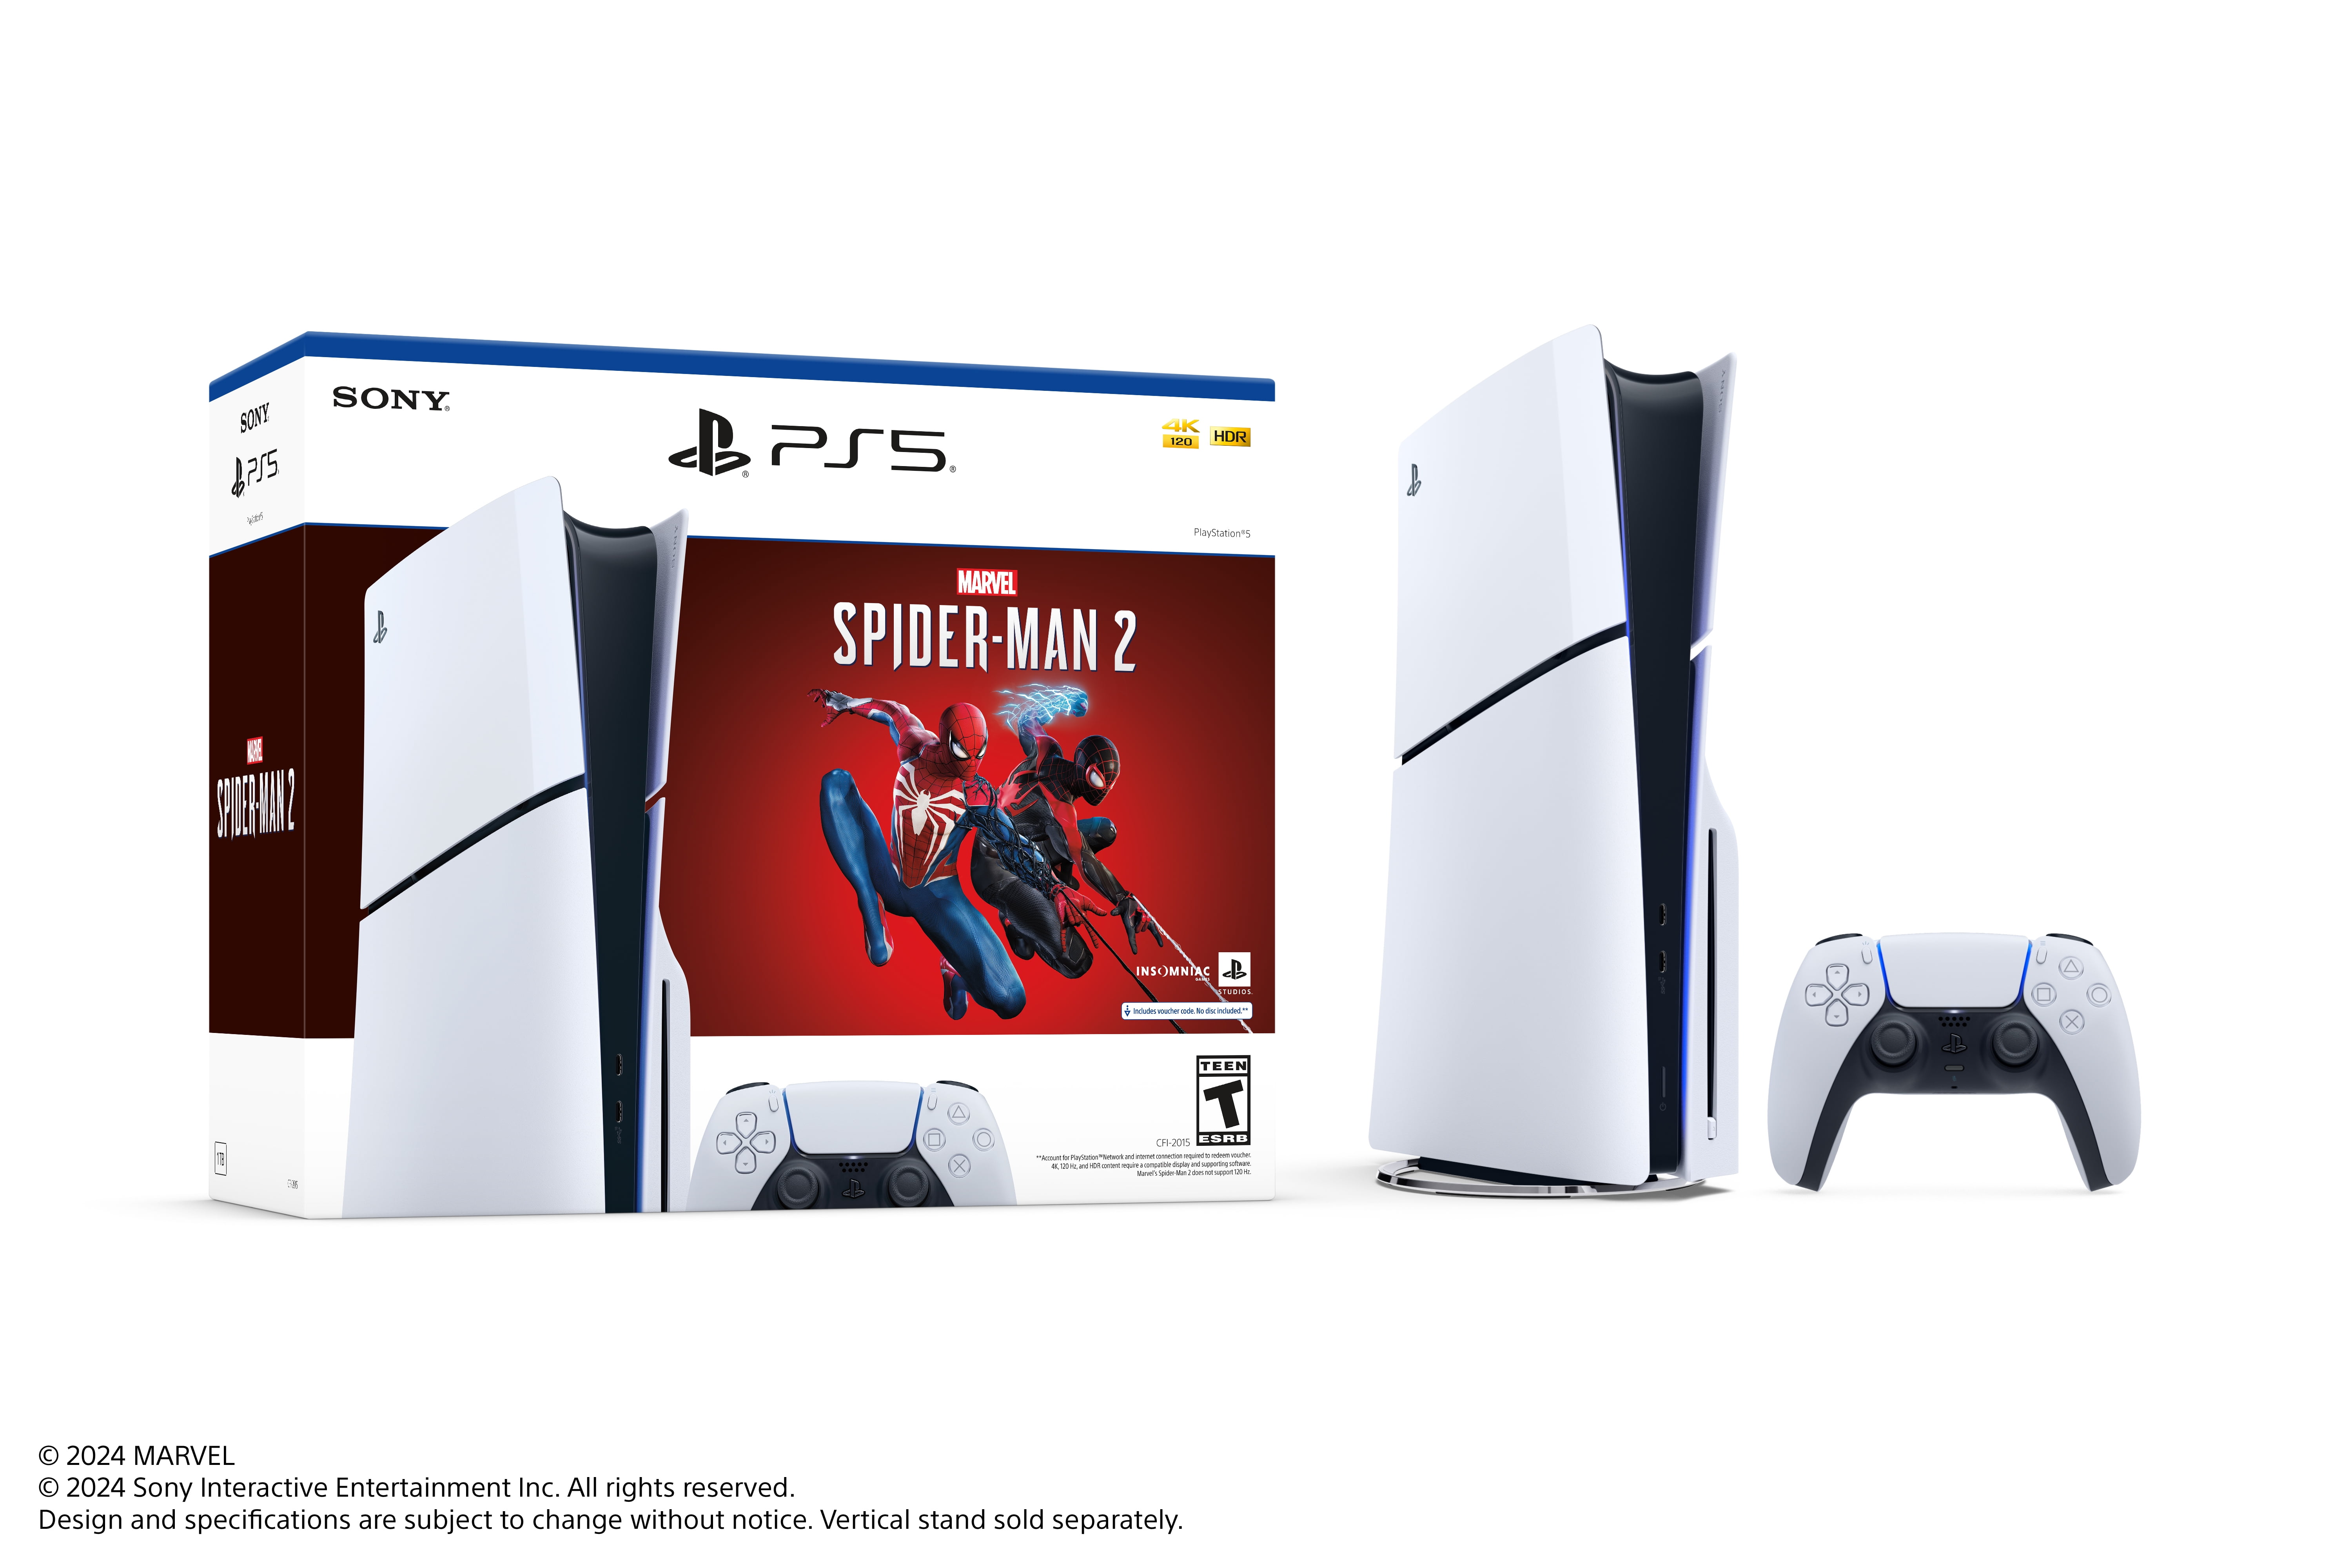 Consola Playstation 5 Slim 1 Tb + Videojuego Marvel'S Spider-Man 2  Internacional